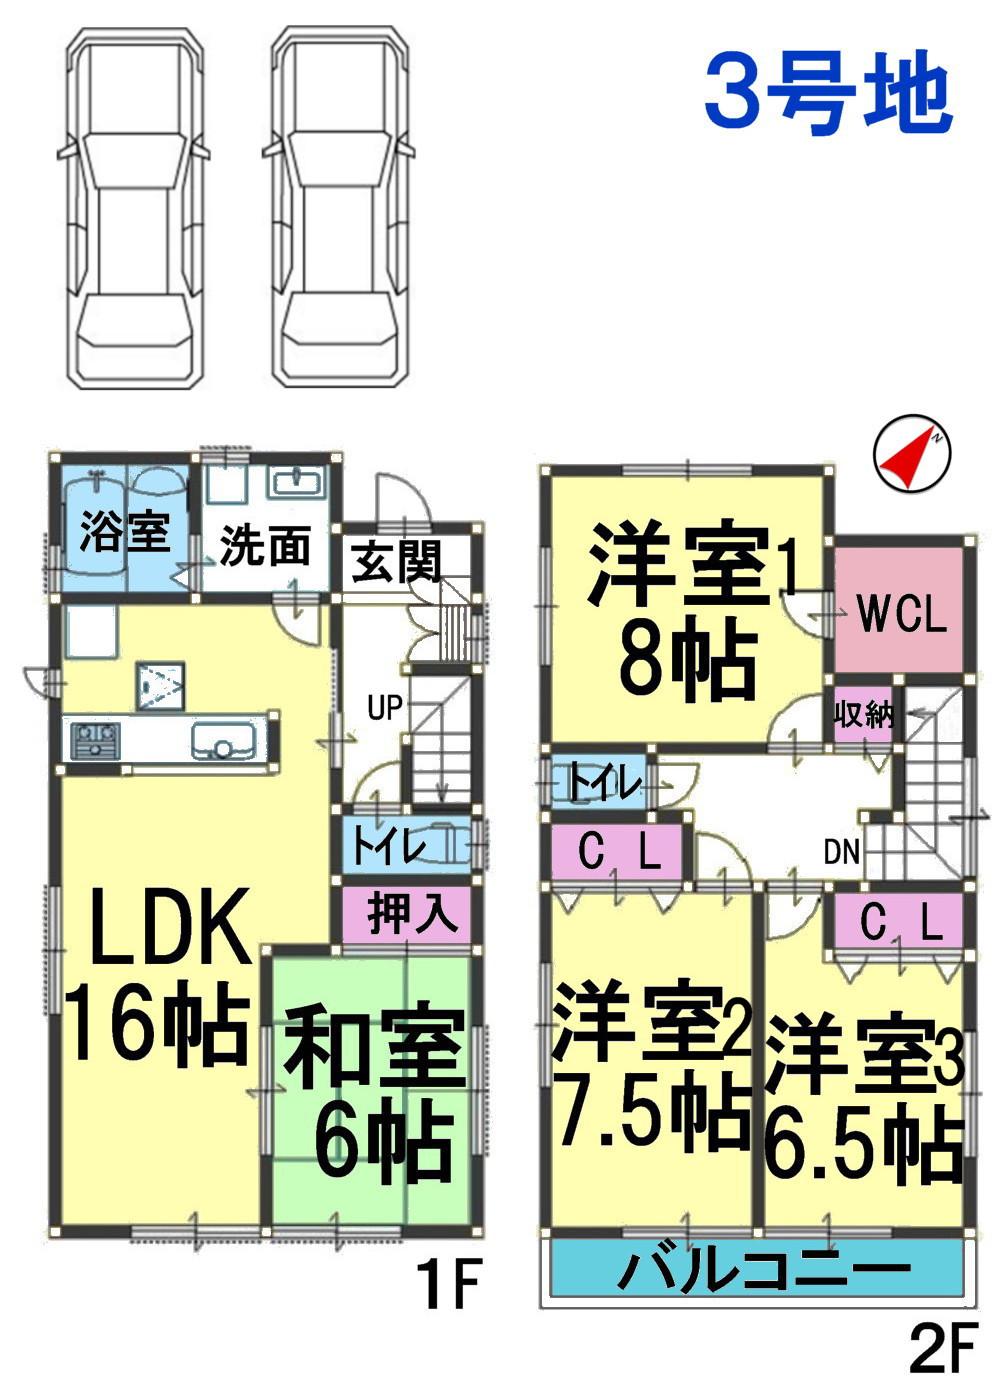 Floor plan. (No. 3 locations), Price 31,800,000 yen, 4LDK, Land area 124.2 sq m , Building area 105.98 sq m